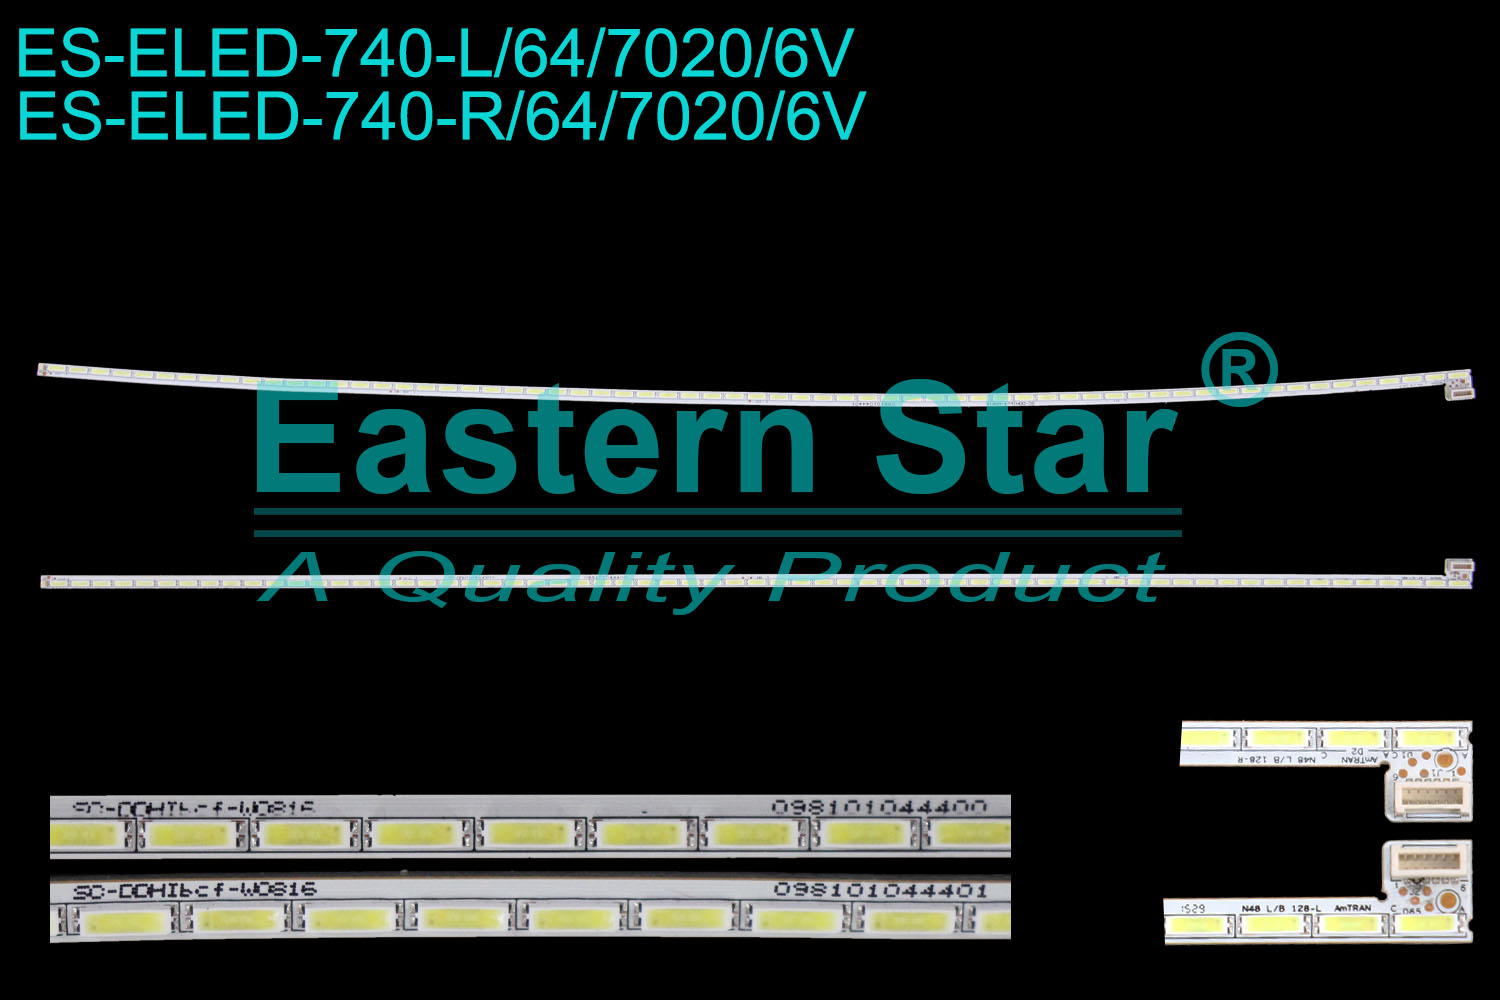 ES-ELED-740 ELED/EDGE TV backlight use for /''  L:SO-00HIbcf-W0816 098101044400  N48 L/B 128-L   R:SO-00HIbcf-W0816 098101044401  N48 L/B 128-R LED STRIPS(2)